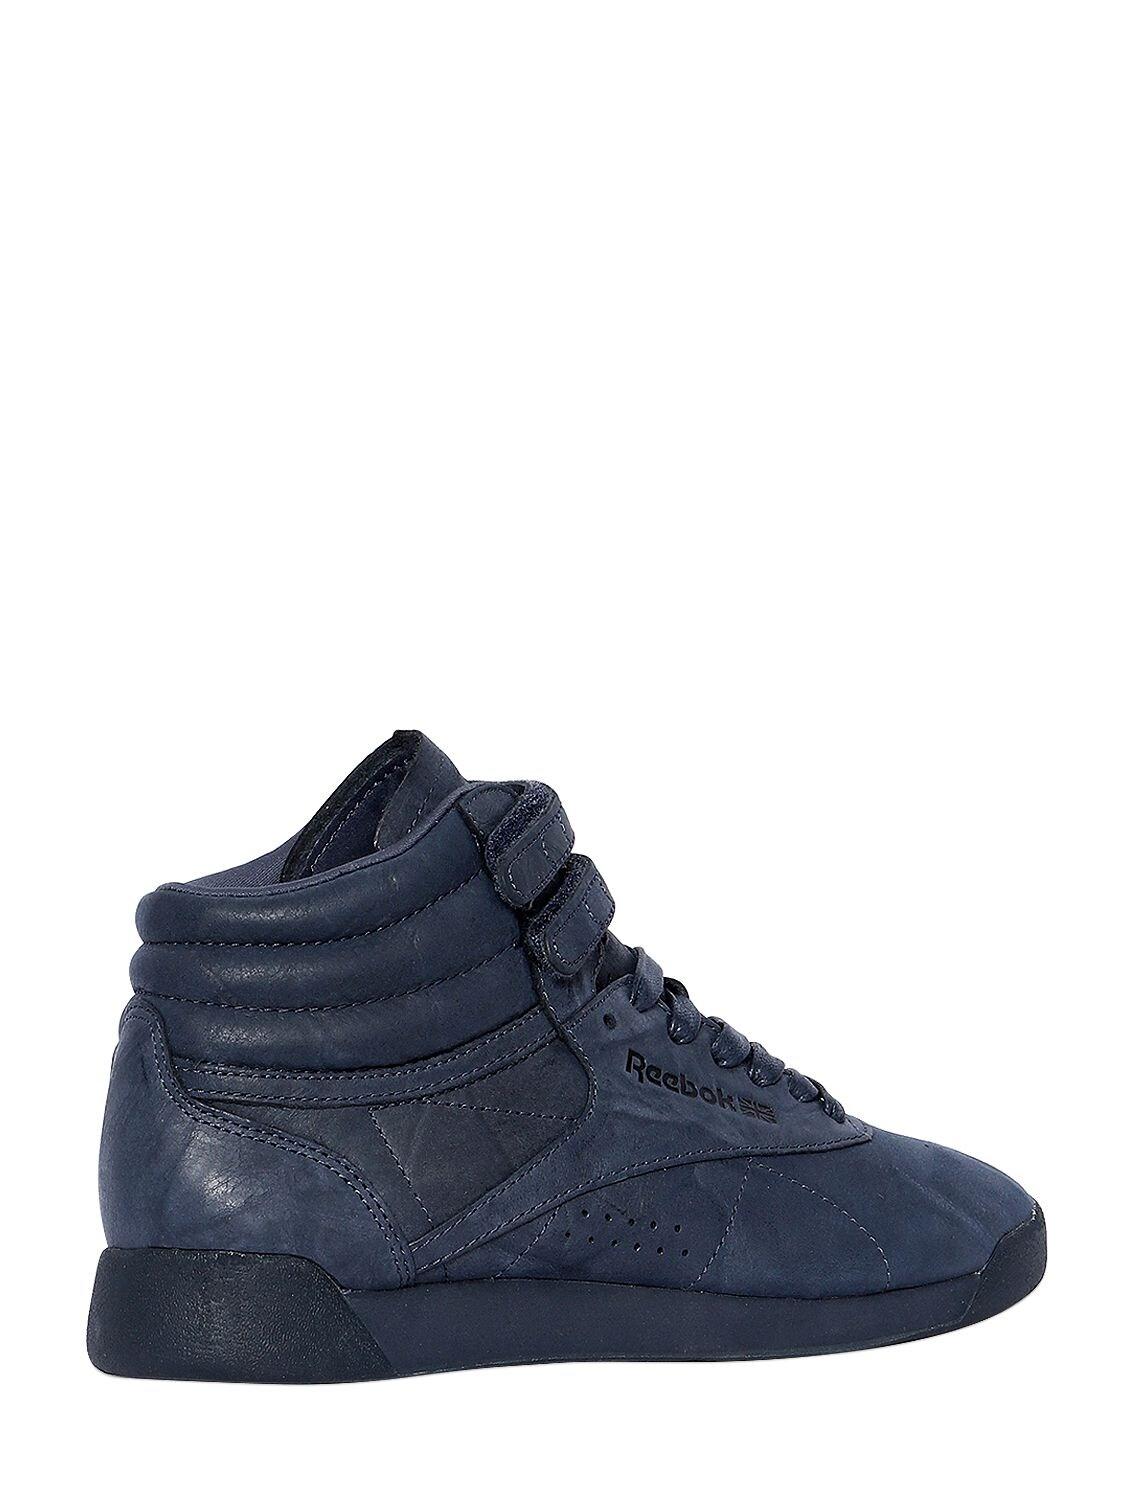 Reebok Freestyle Nubuck High Top Sneakers in Blue | Lyst